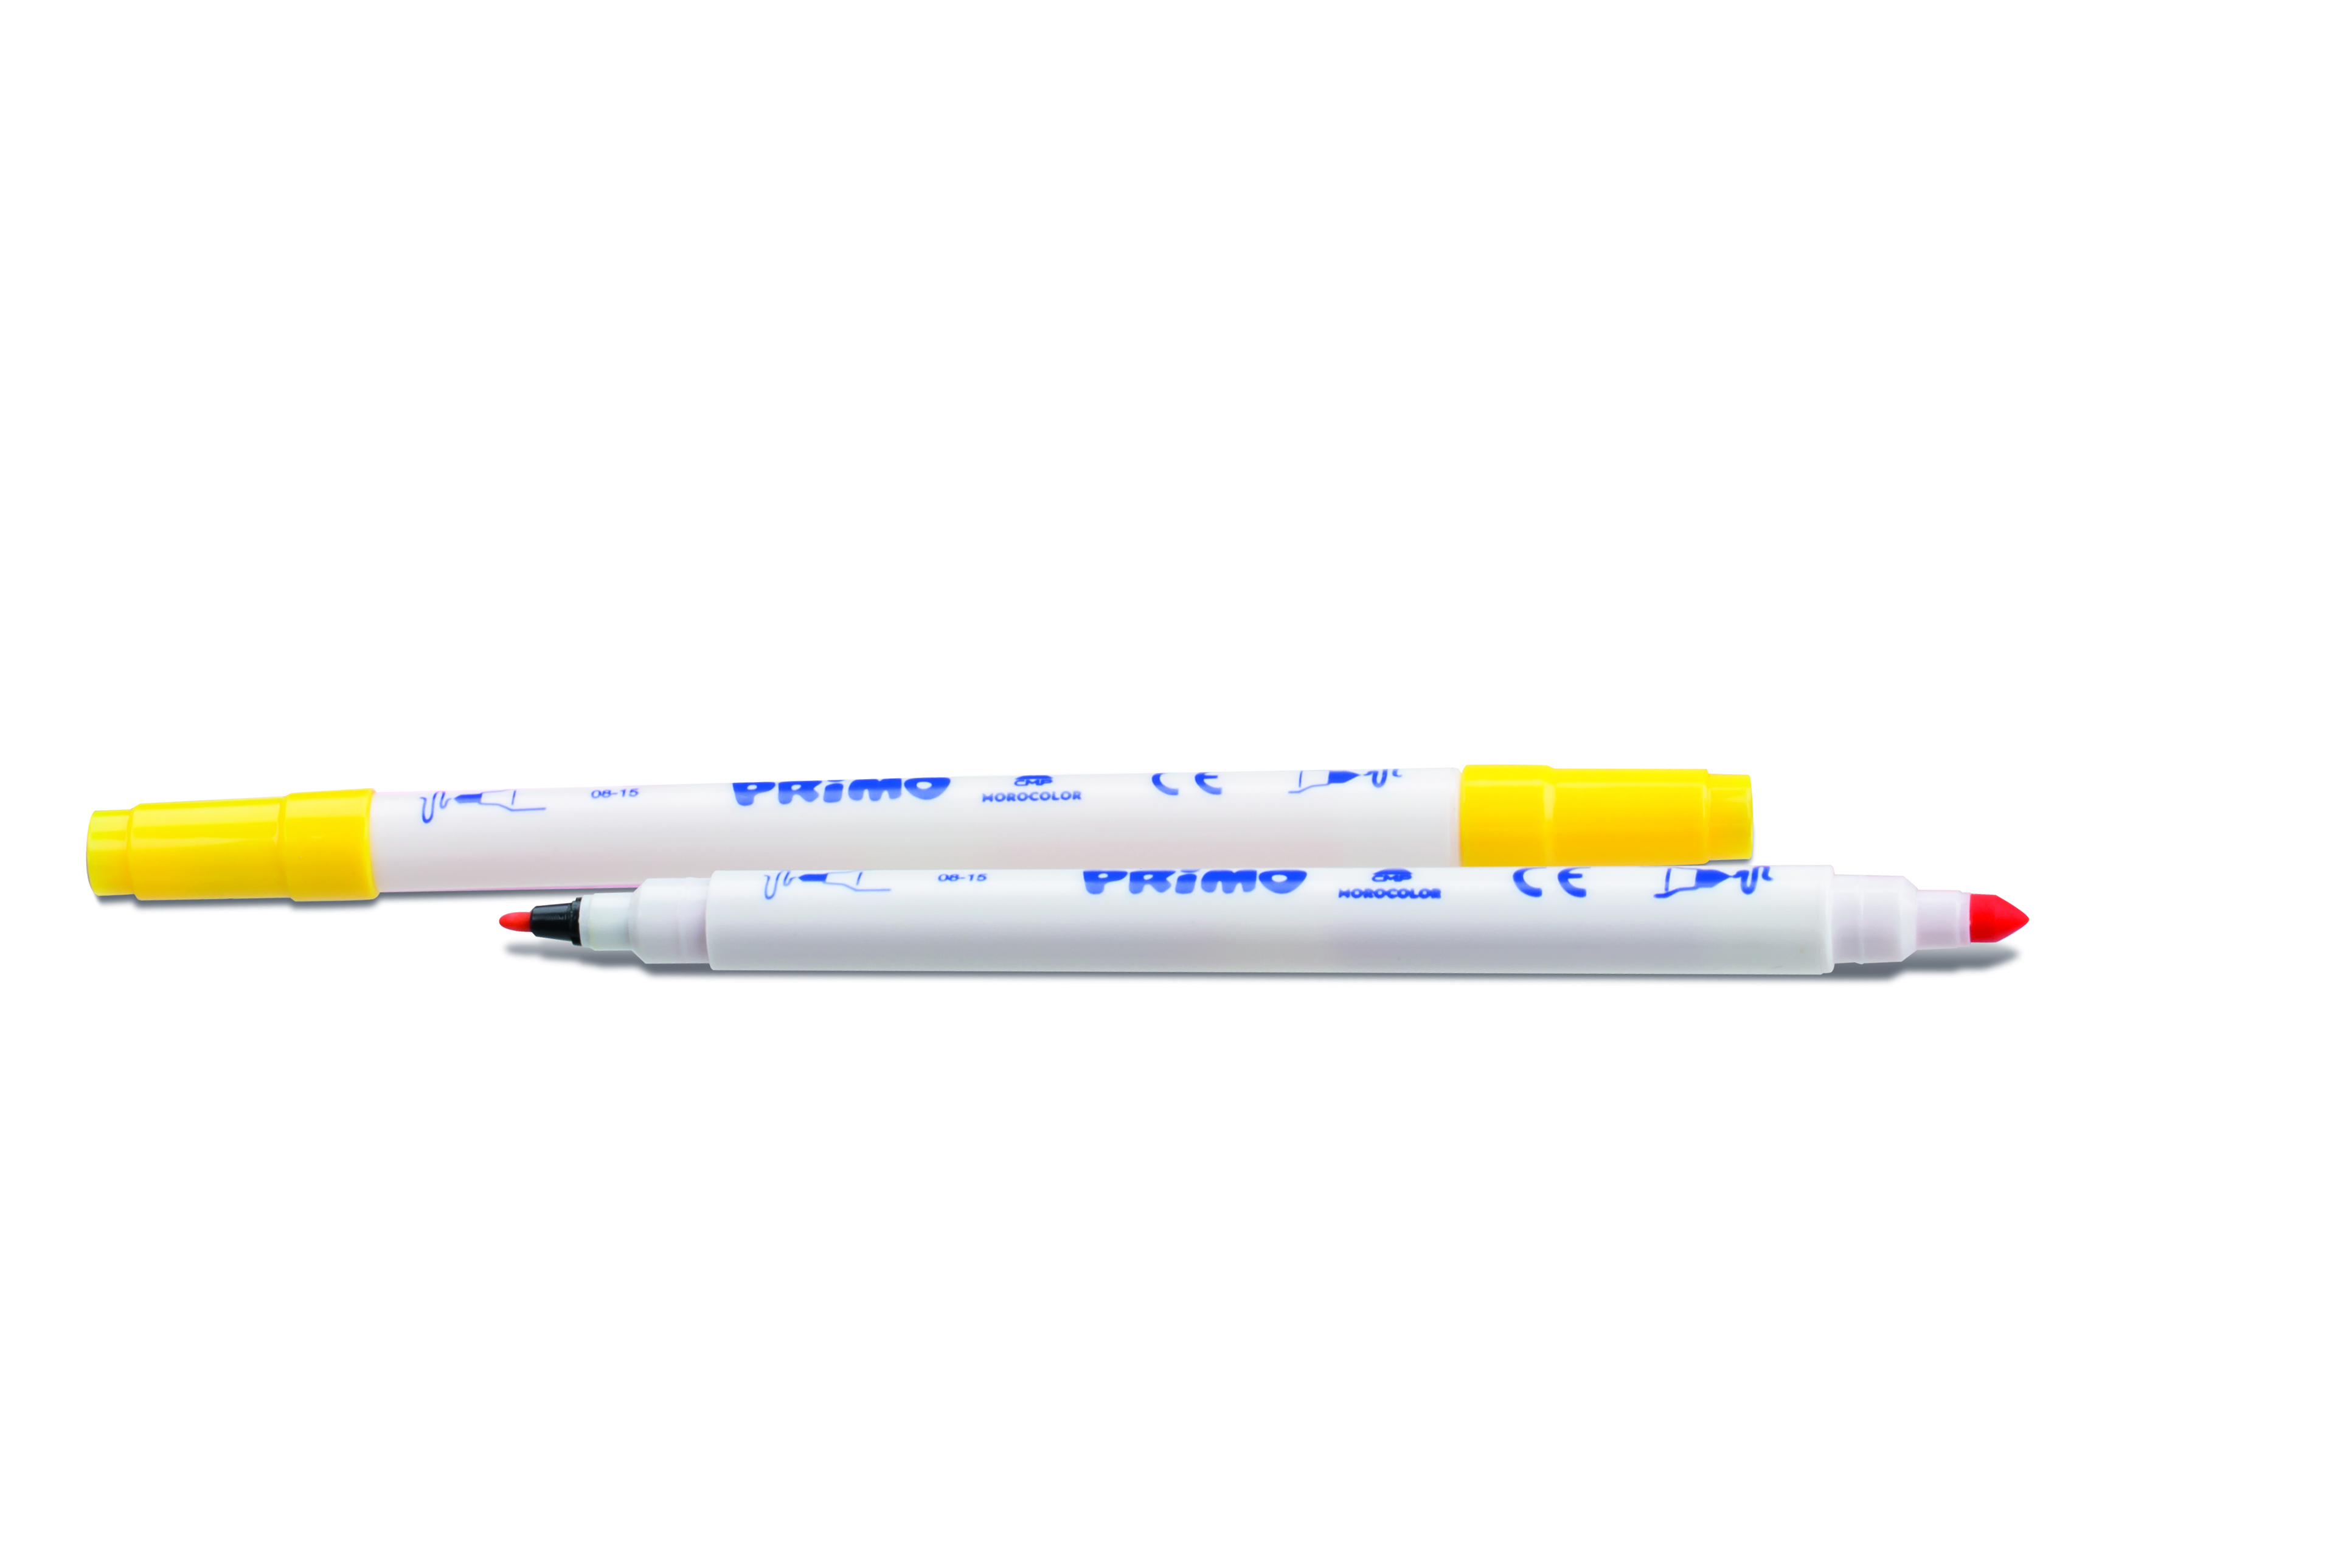 PRIMO double fiber pens, set of 10